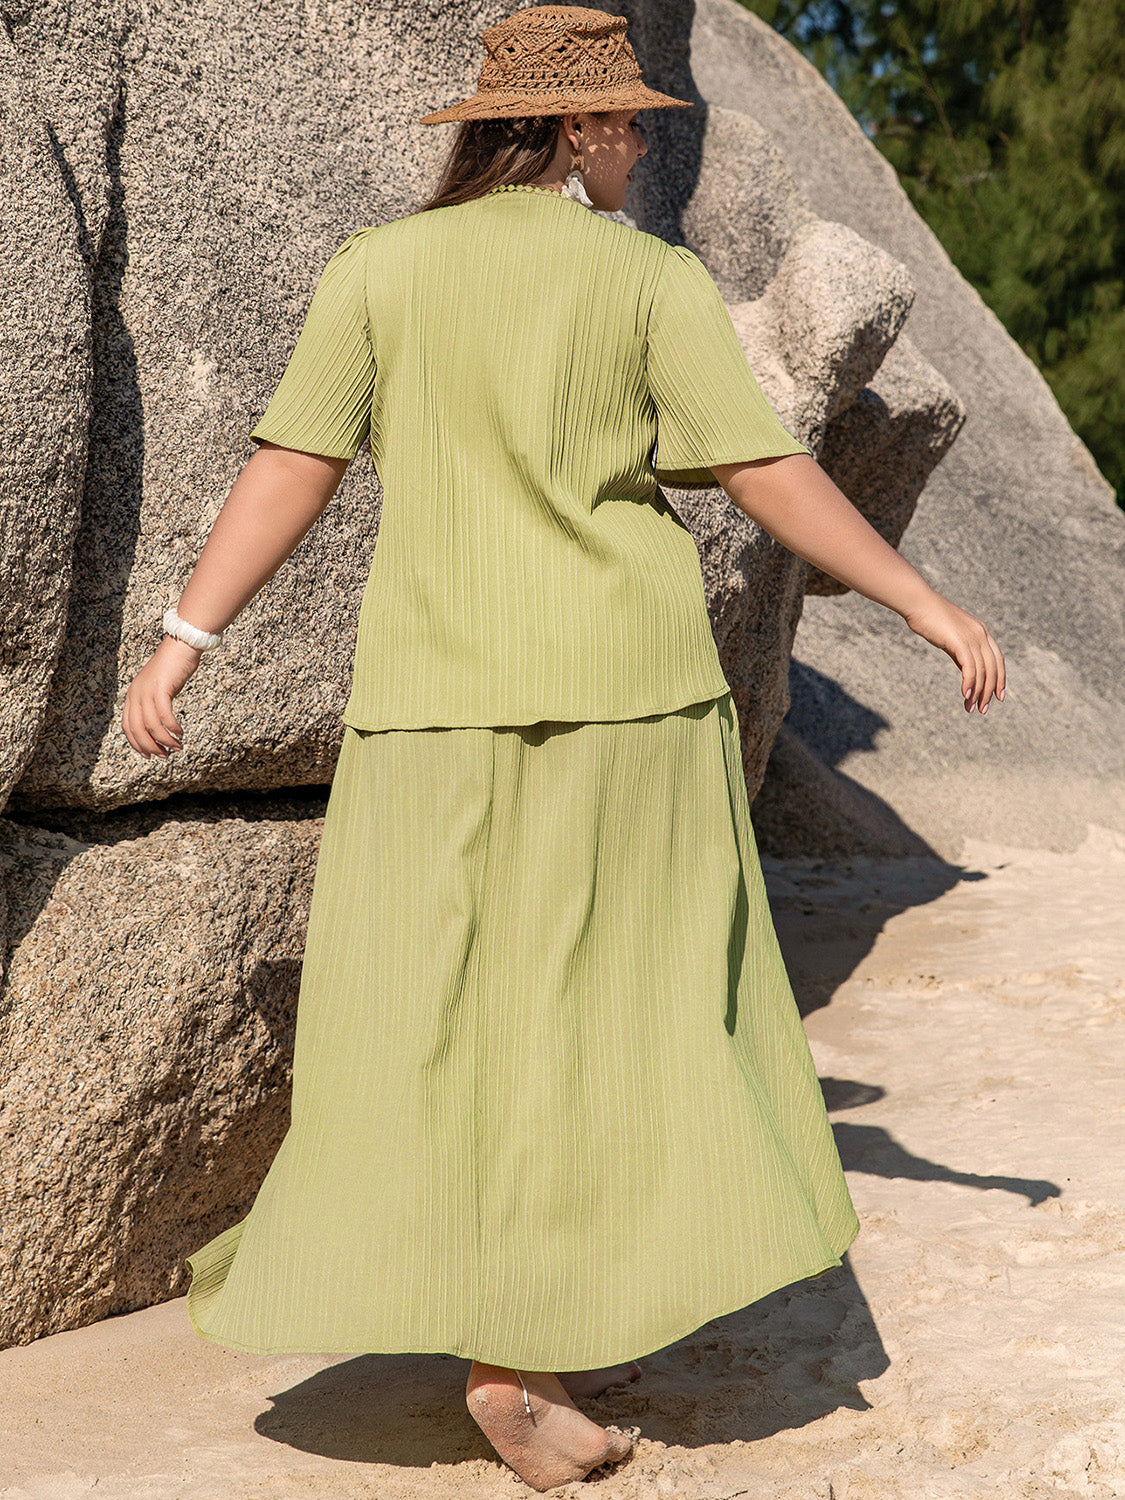 TEEK - Plus Size Yellow-Green V-Neck Half Sleeve Top Skirt Set SET TEEK Trend   